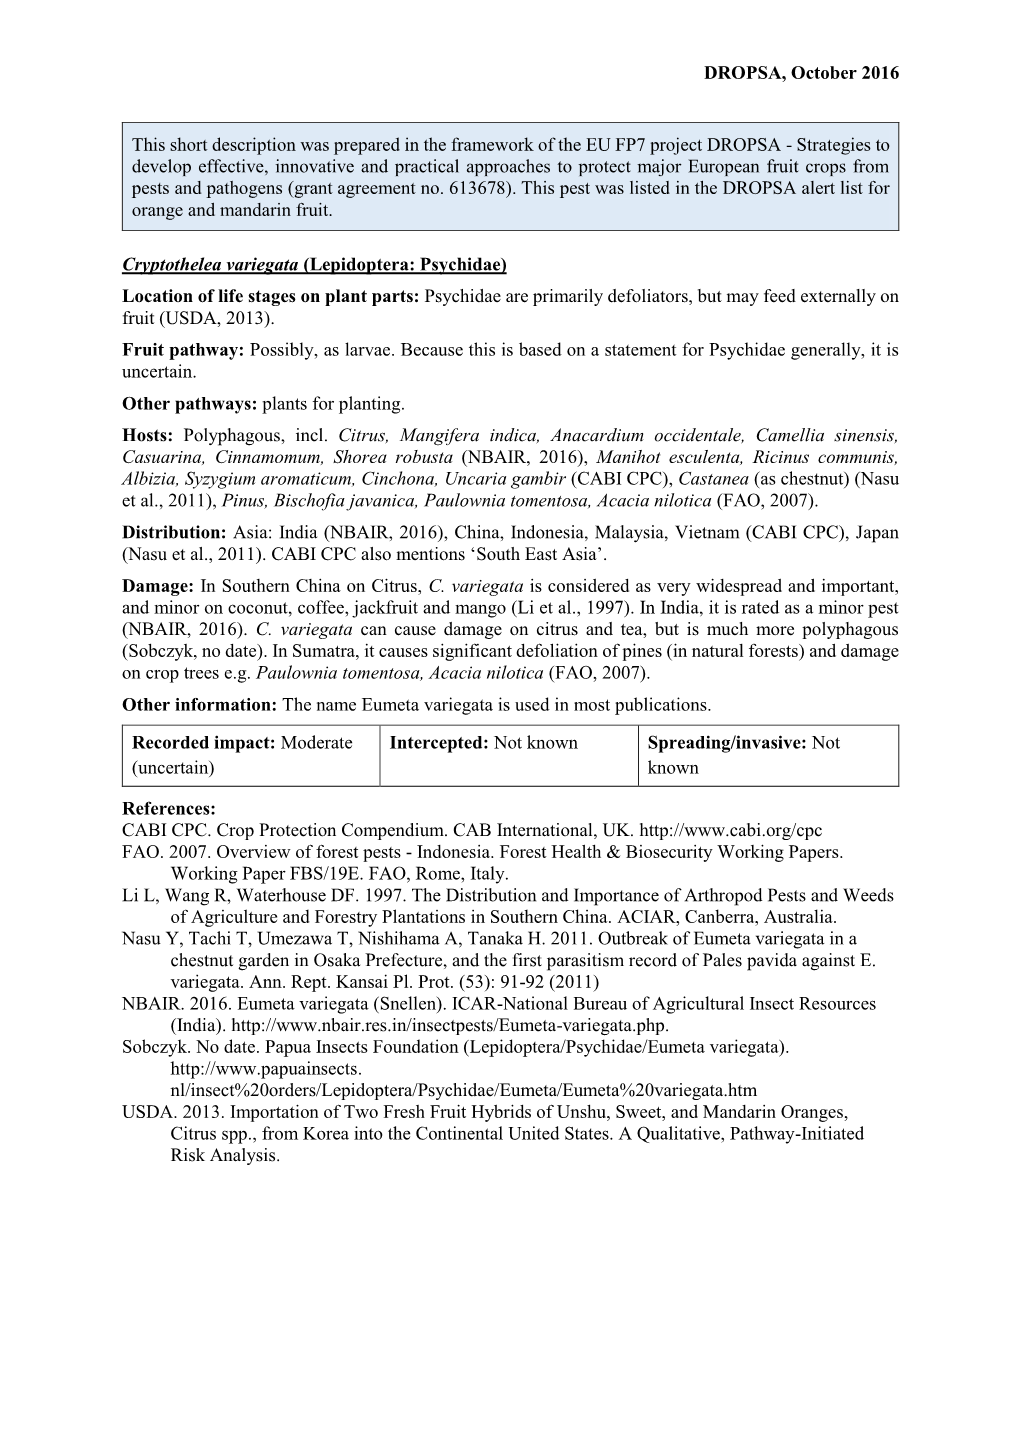 Mini Data Sheet on Cryptothelea Variegata (Publication Date: 2016)